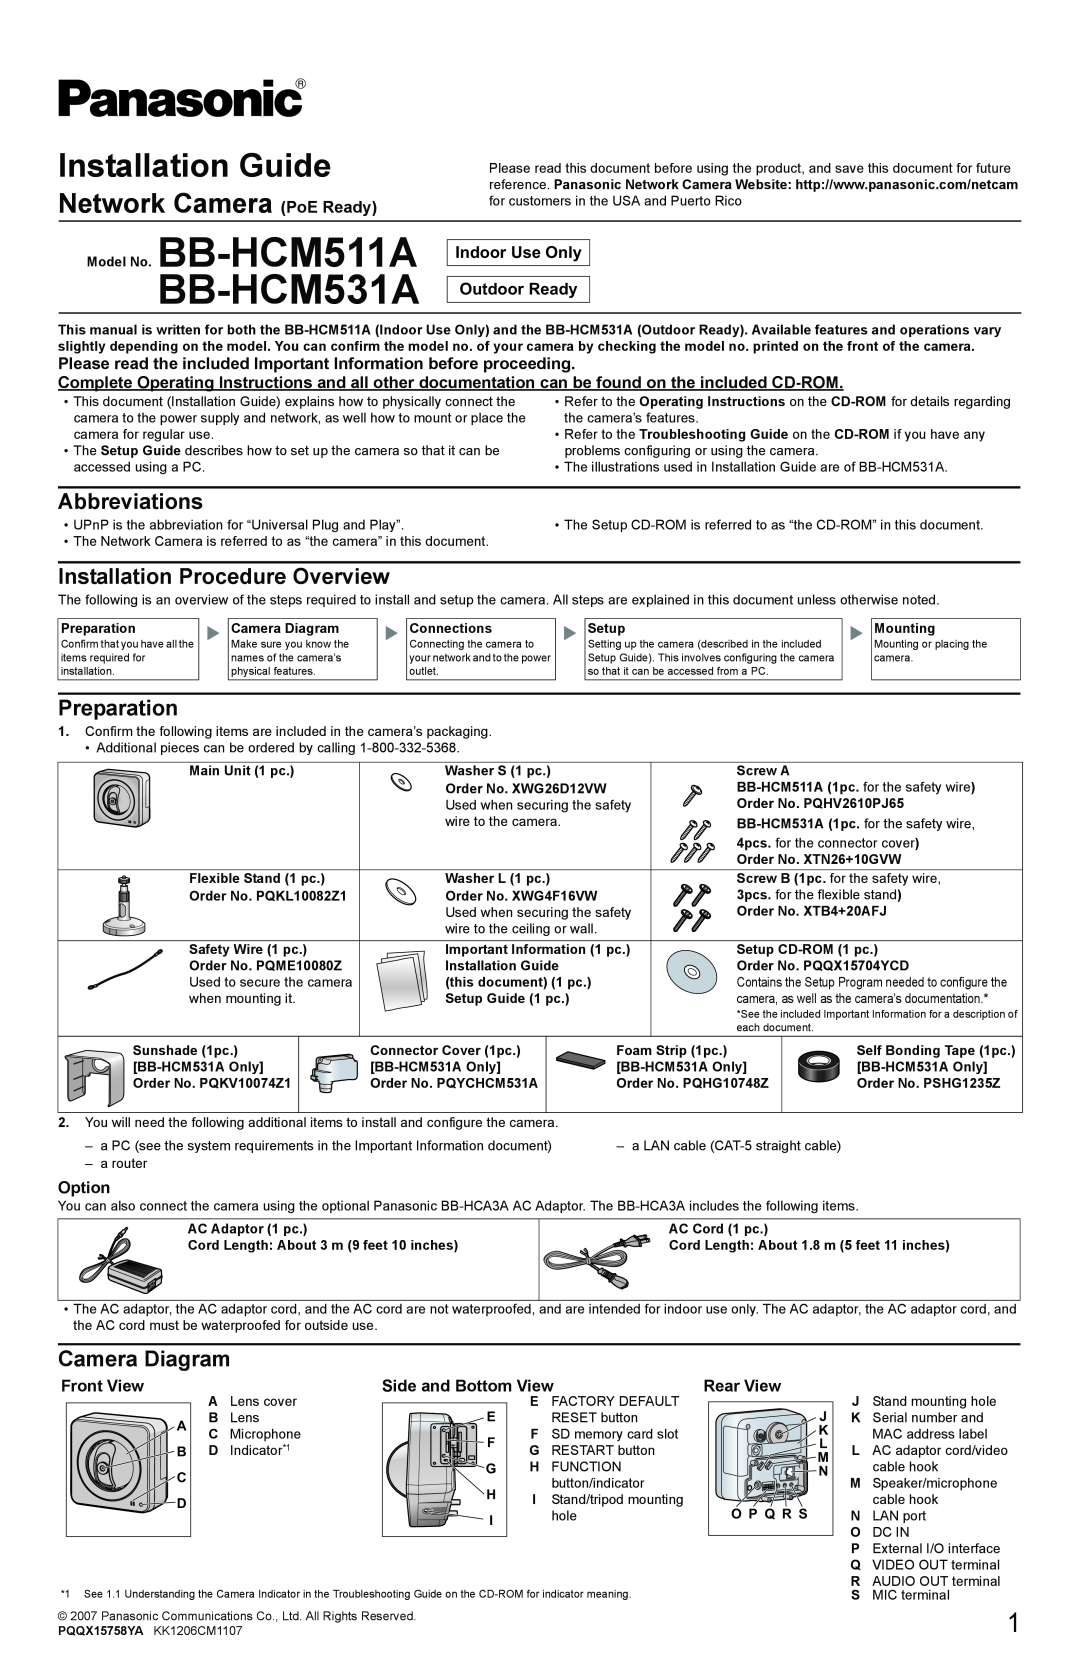 Panasonic BB-HCM511A setup guide Abbreviations, Installation Procedure Overview, Preparation, Camera Diagram, Option 